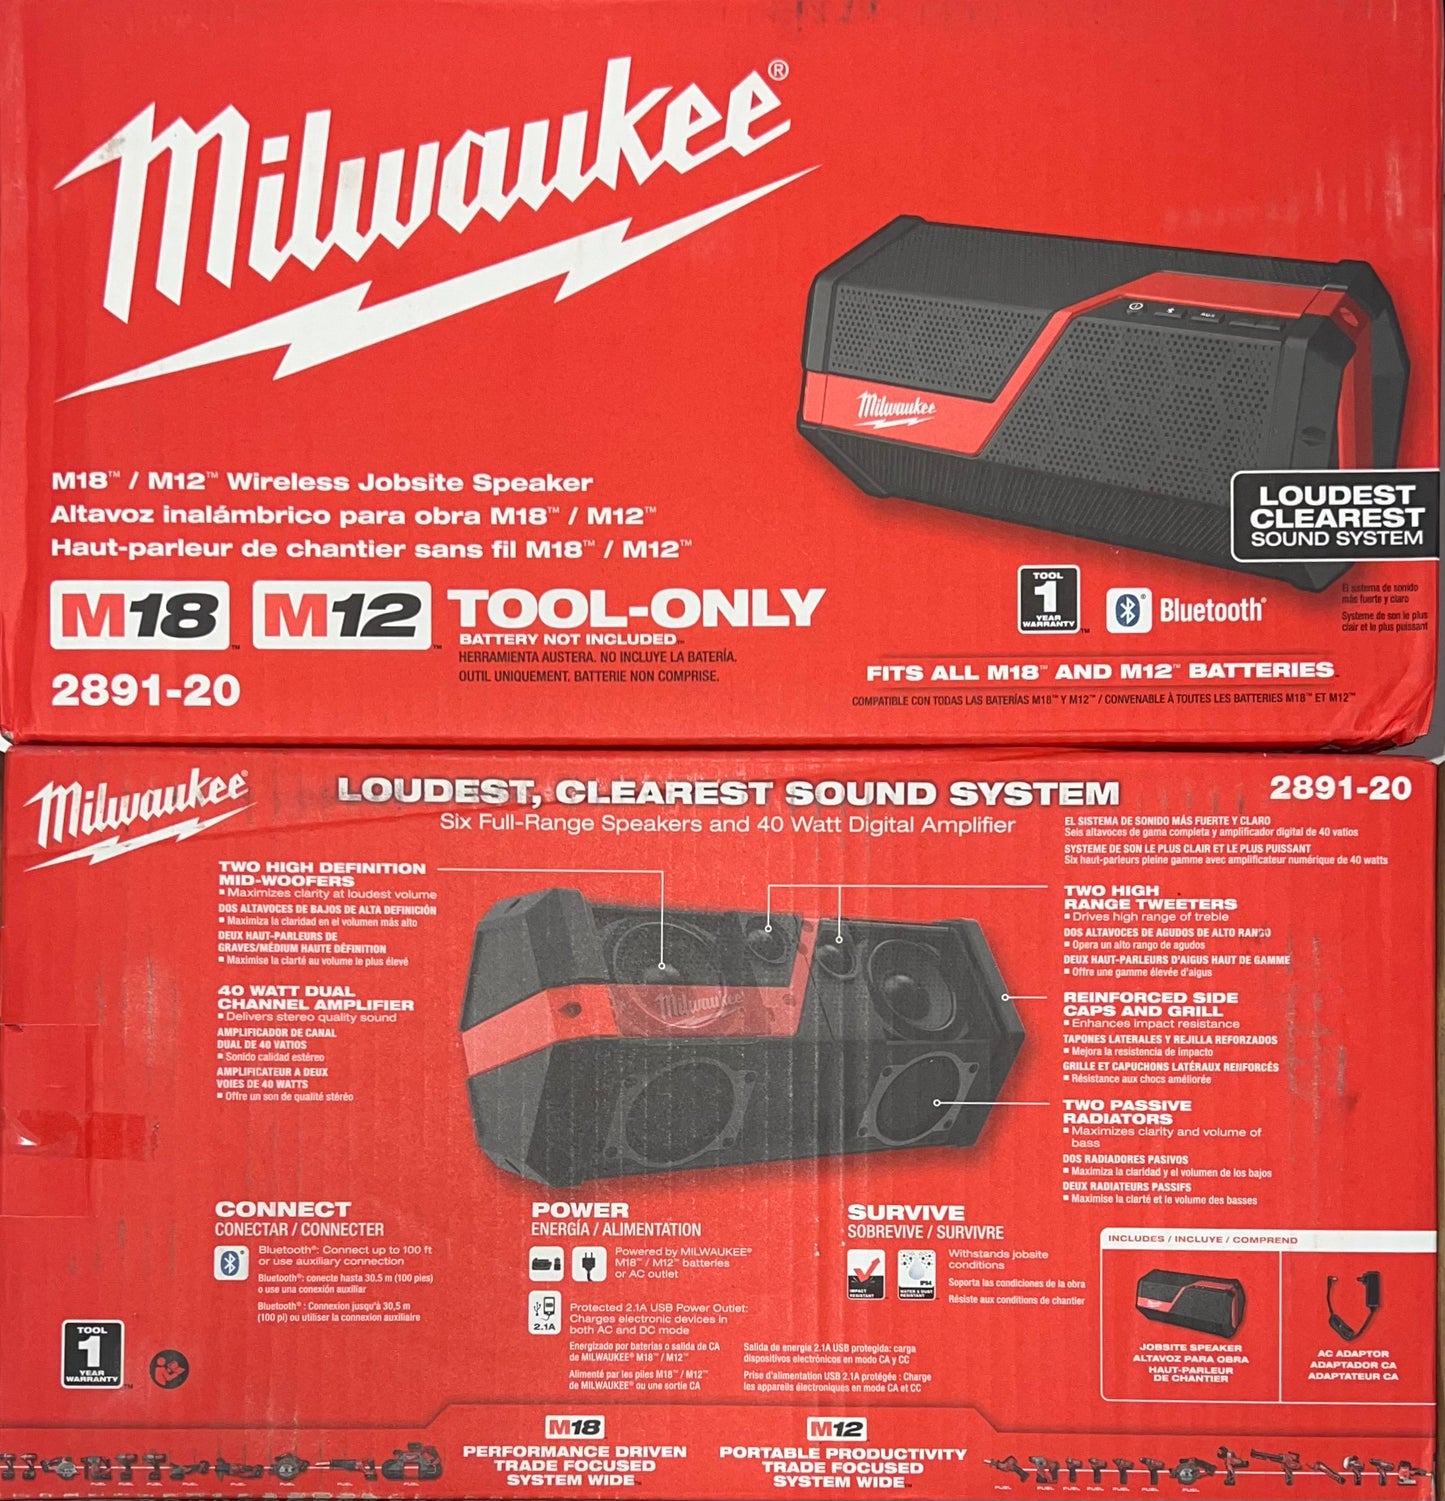 Milwaukee M18/M12 Wireless Jobsite Speaker. Model #2891-20